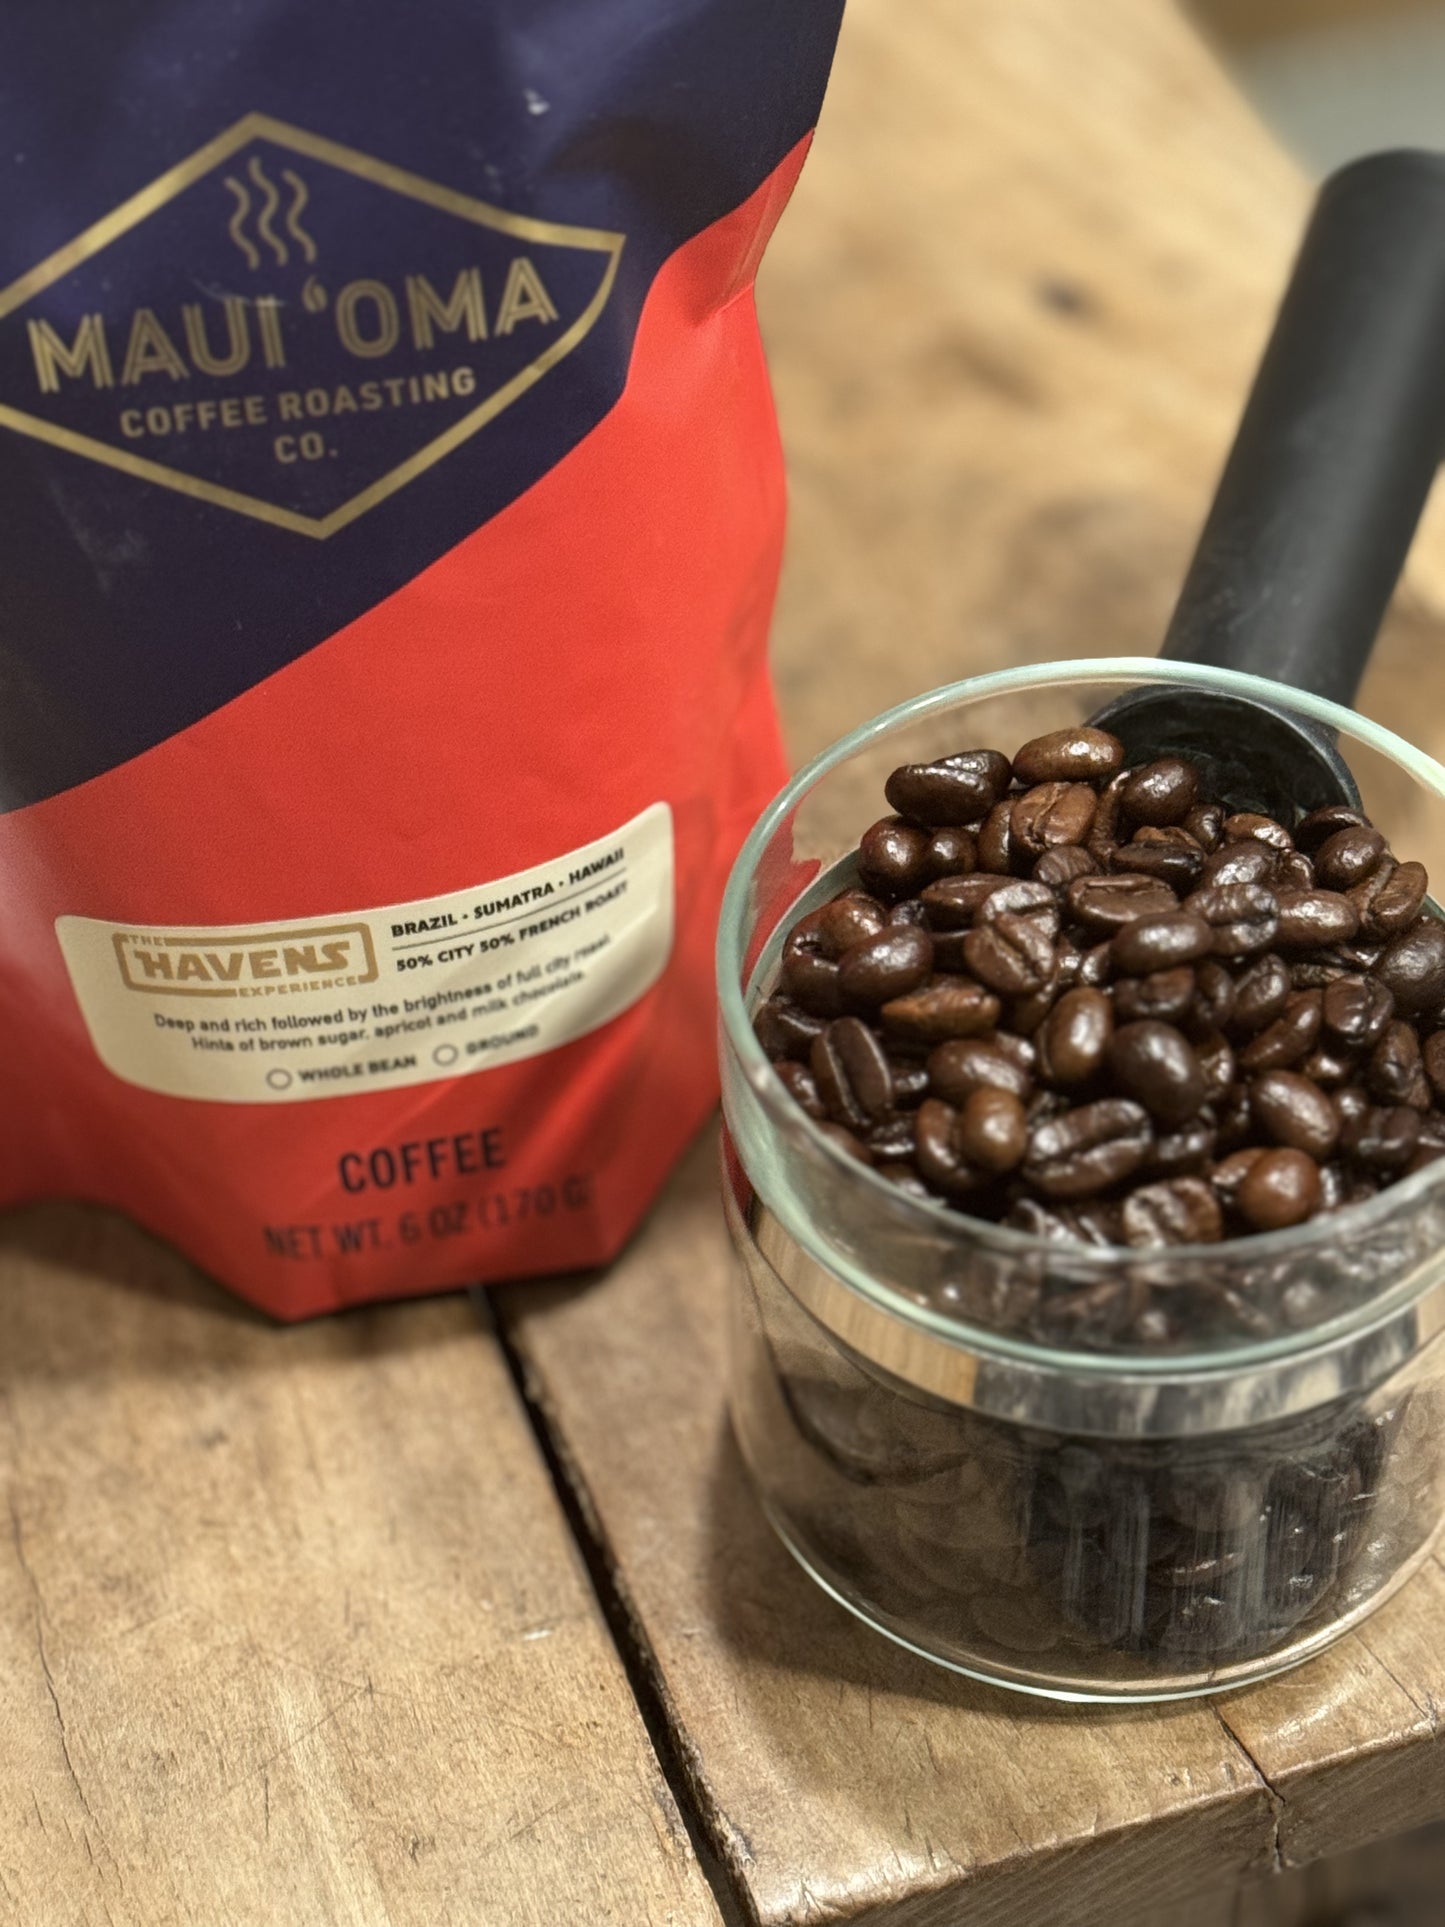 The Havens Experience 6oz Maui ‘Oma Coffee